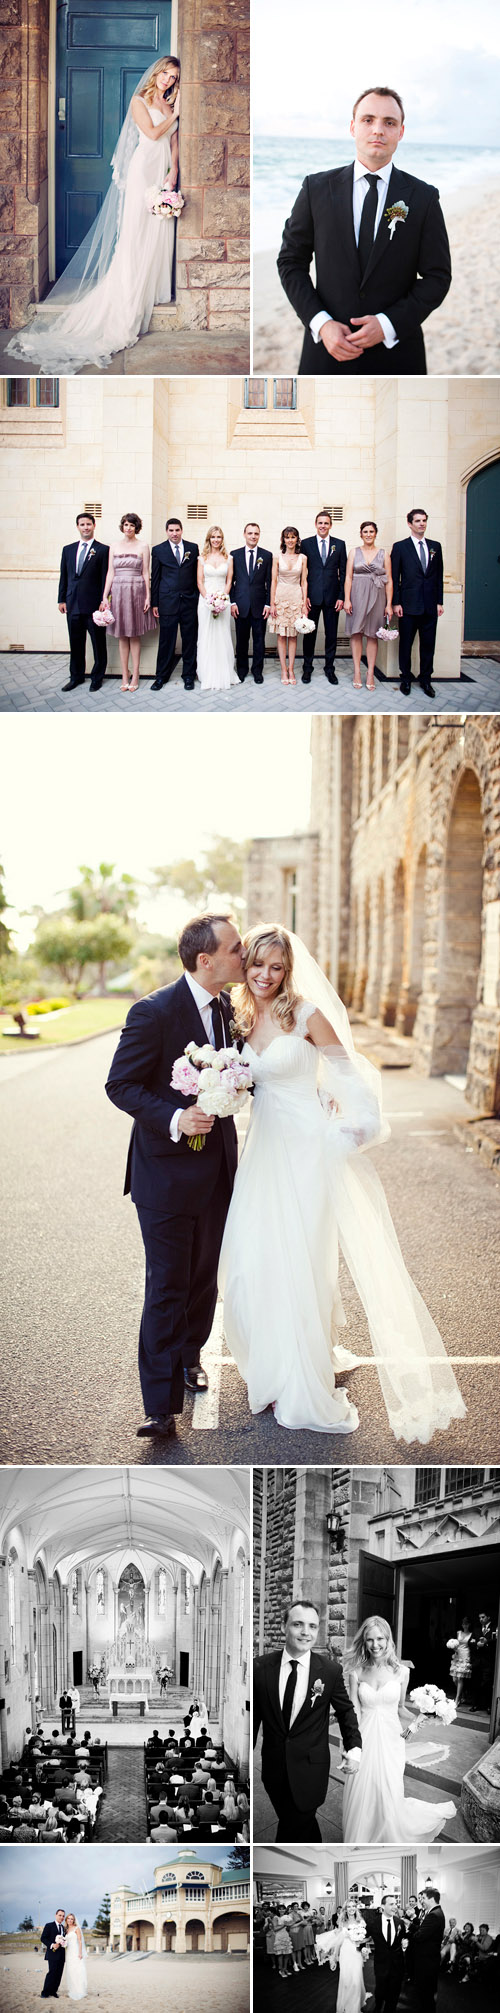 blush pink, ivory and gray spring Australian beach wedding, photos by Natasja Kremers Photography